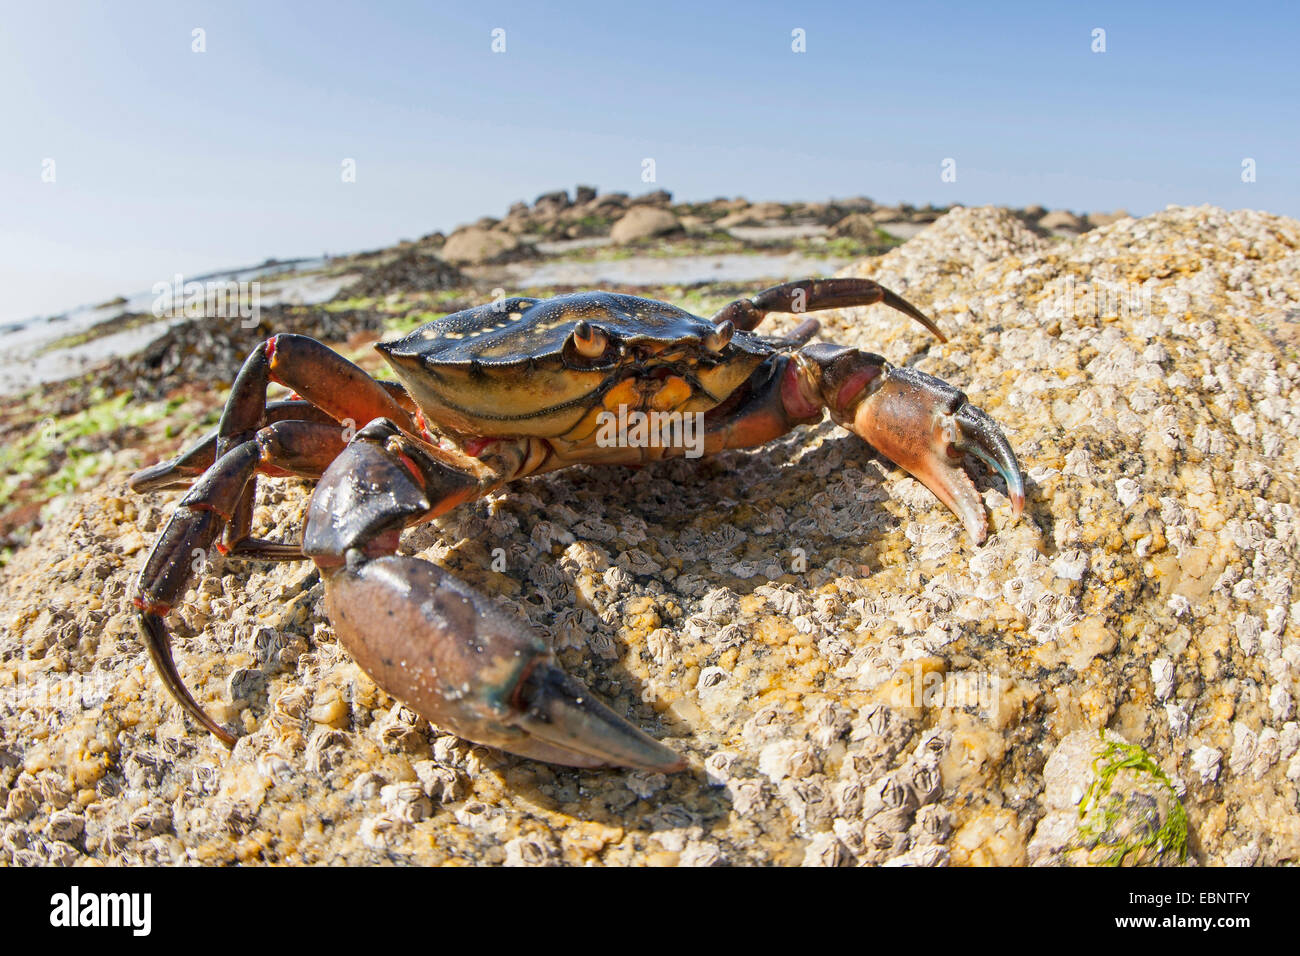 Green shore crab, Green crab, North Atlantic shore crab (Carcinus maenas), at sea shore, Germany Stock Photo